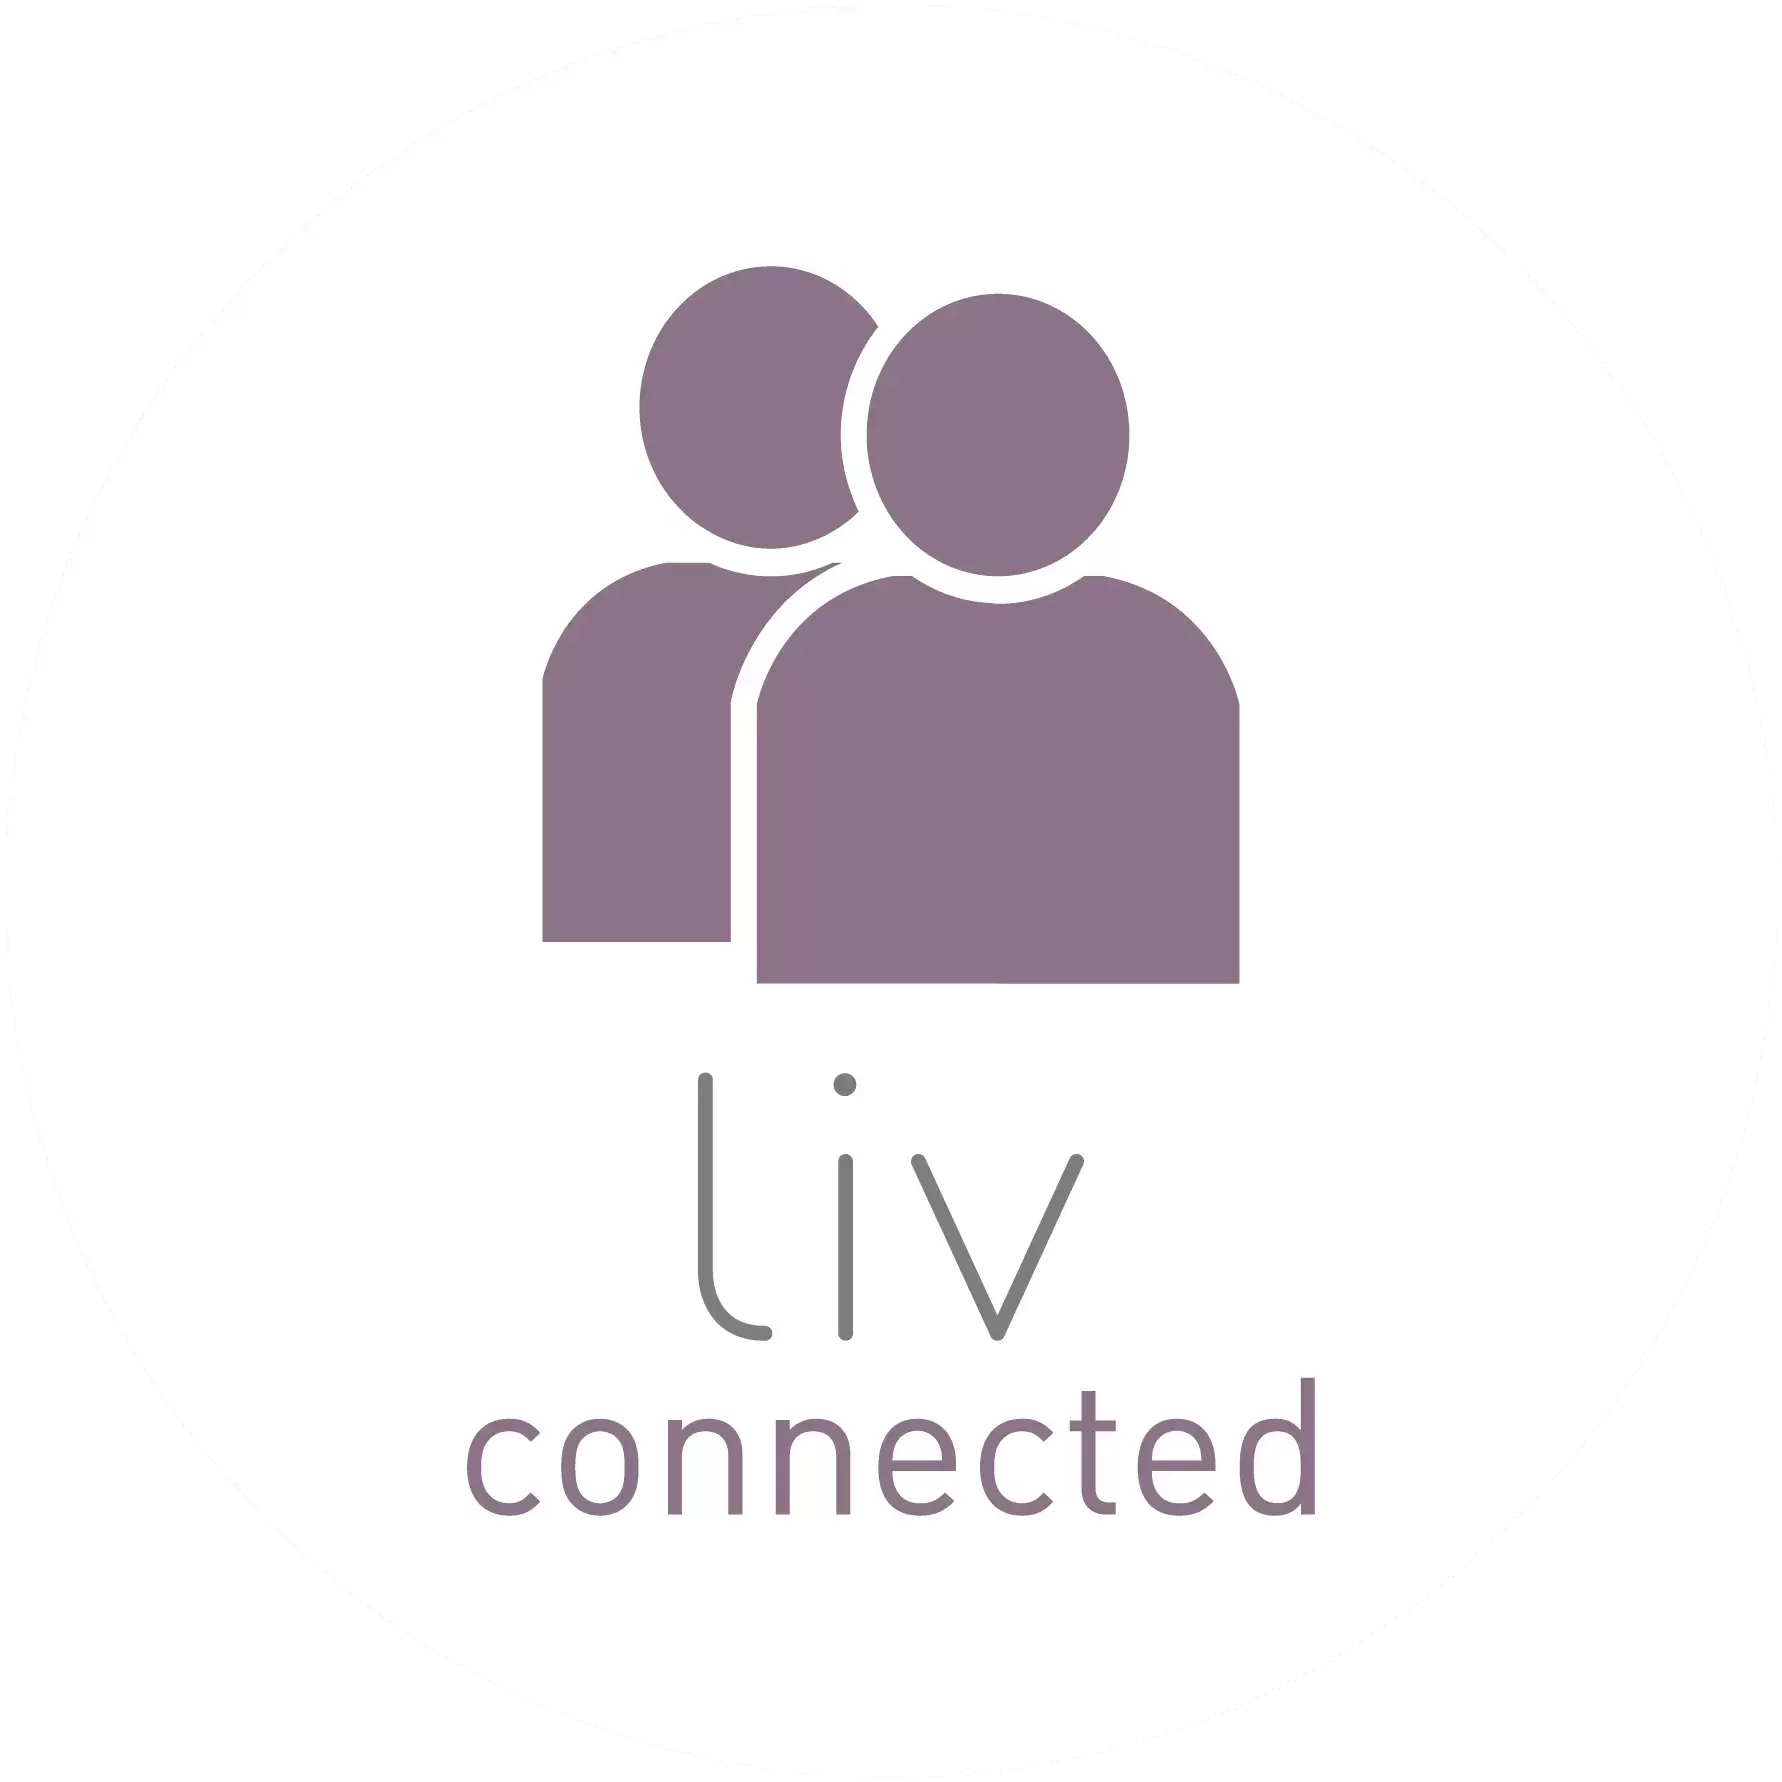 Liv connected logo